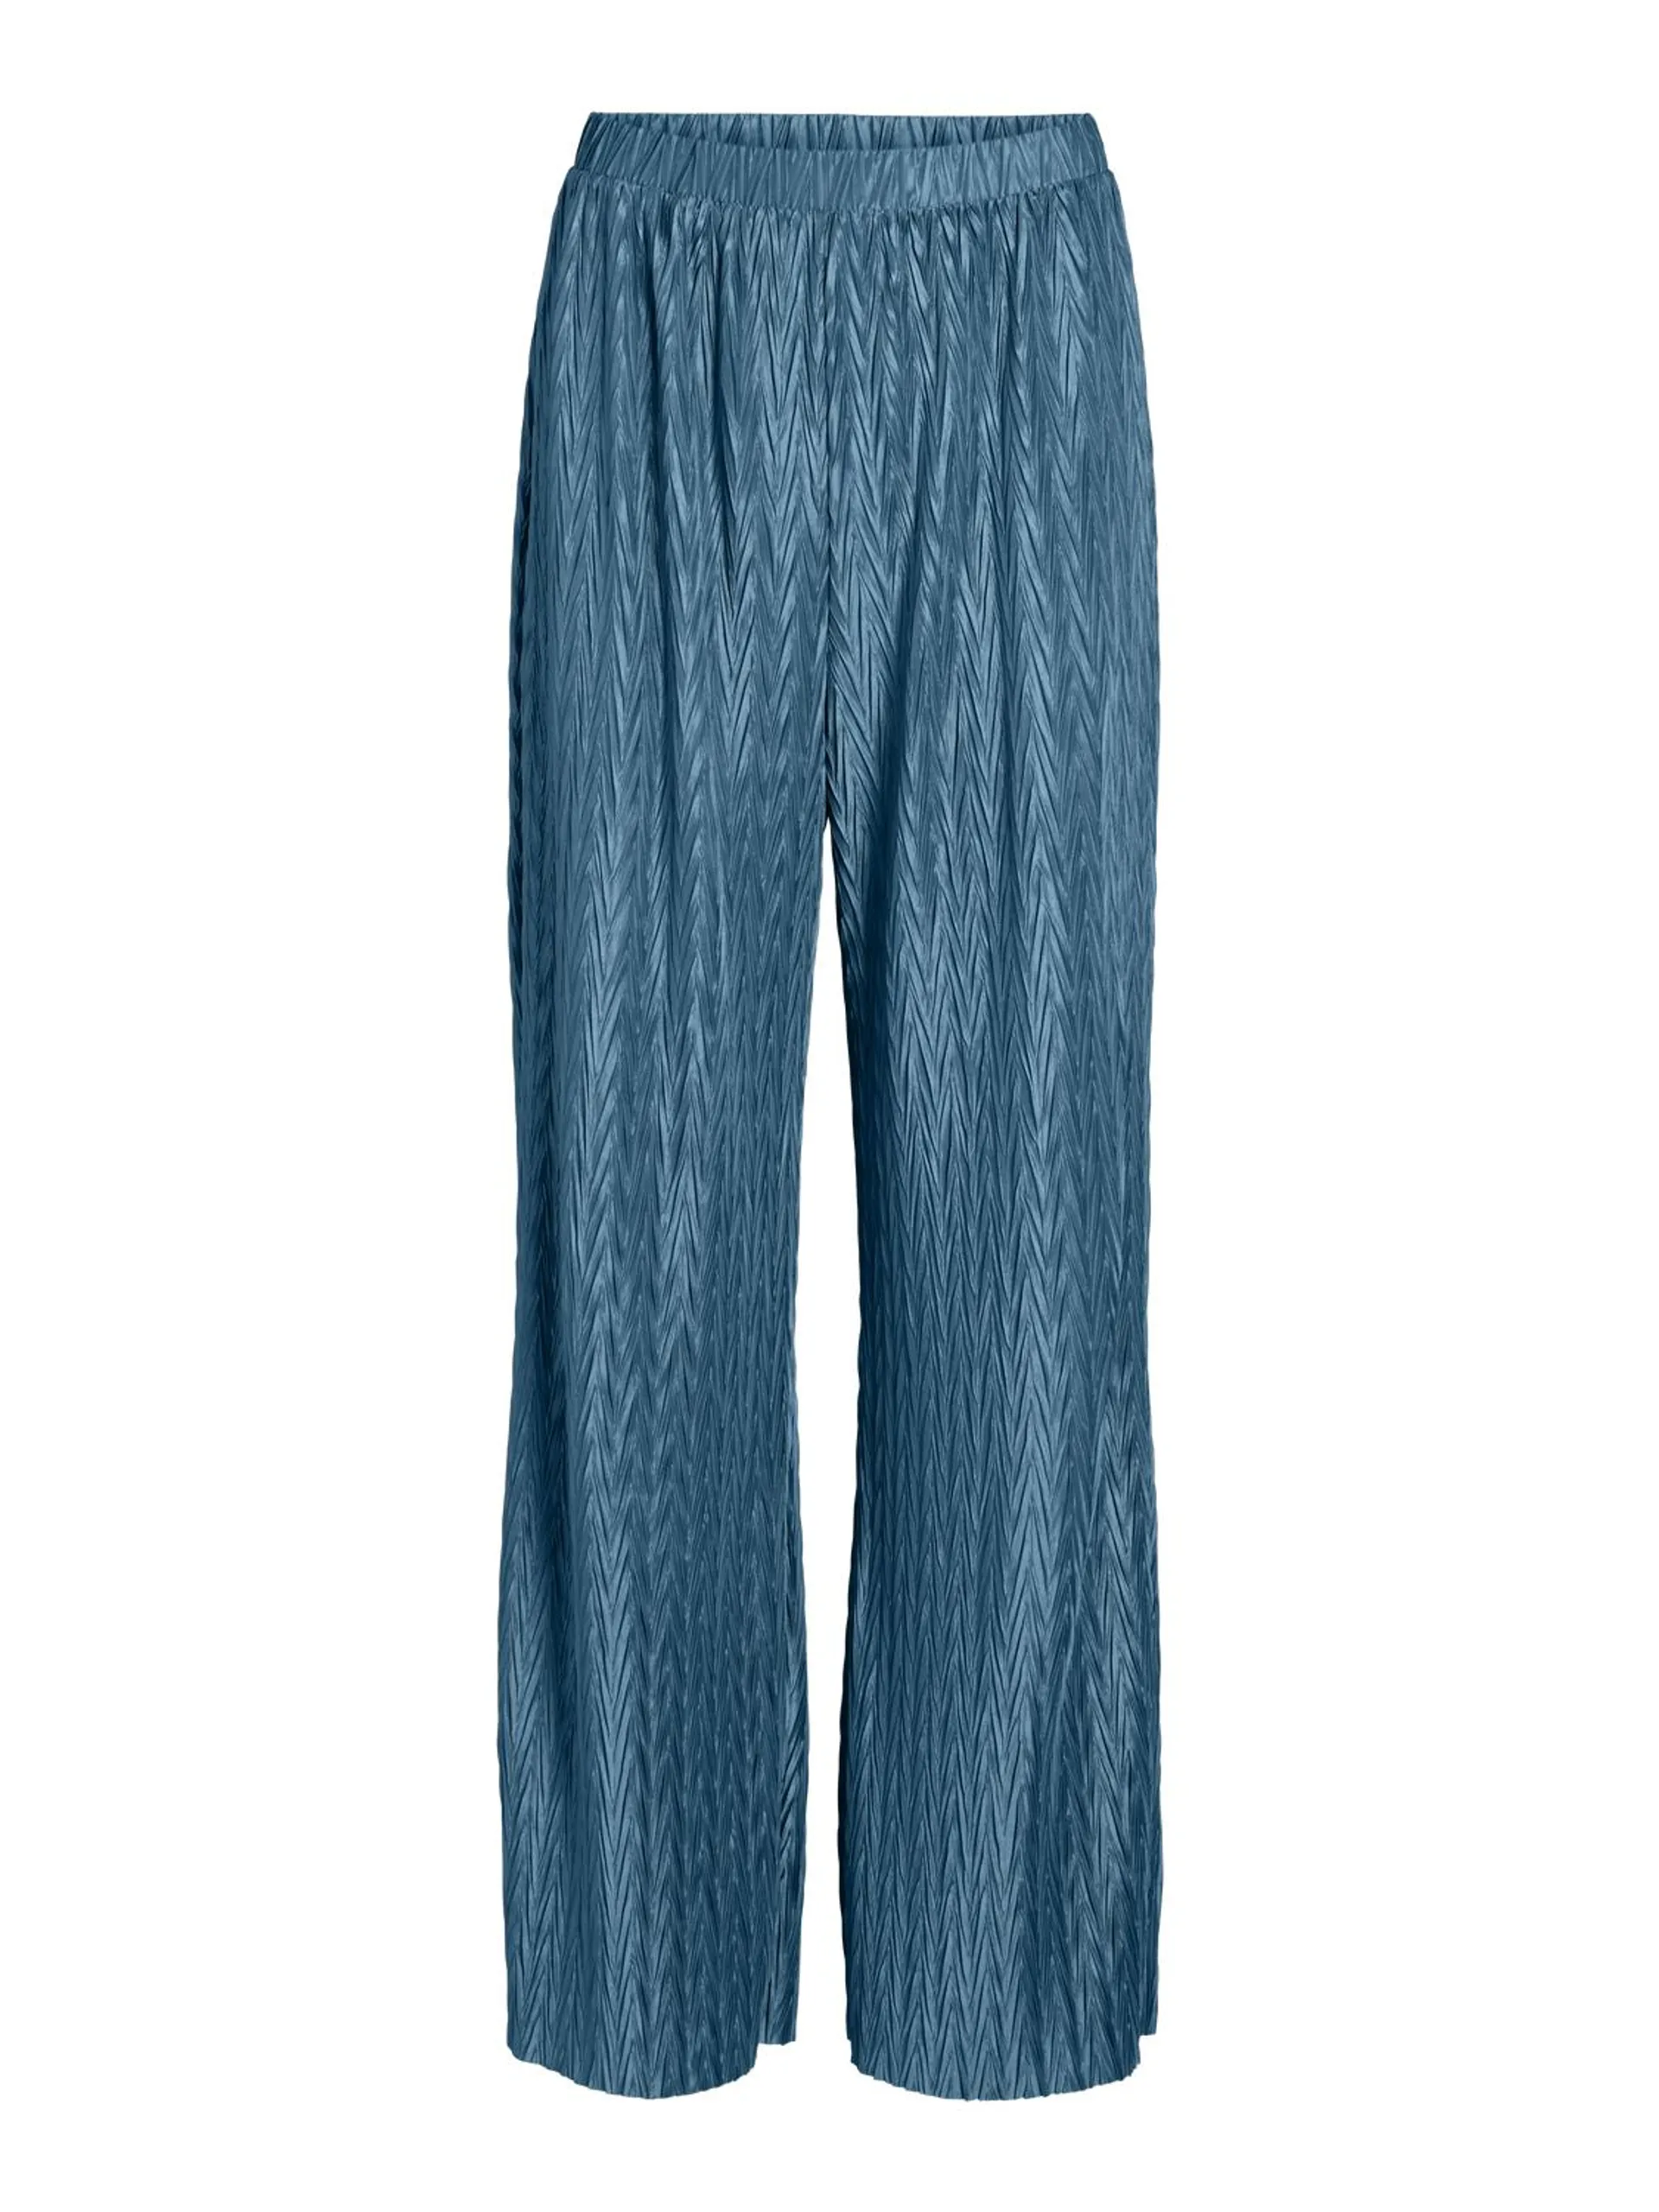 VIPLEASA Pants - Moroccan Blue